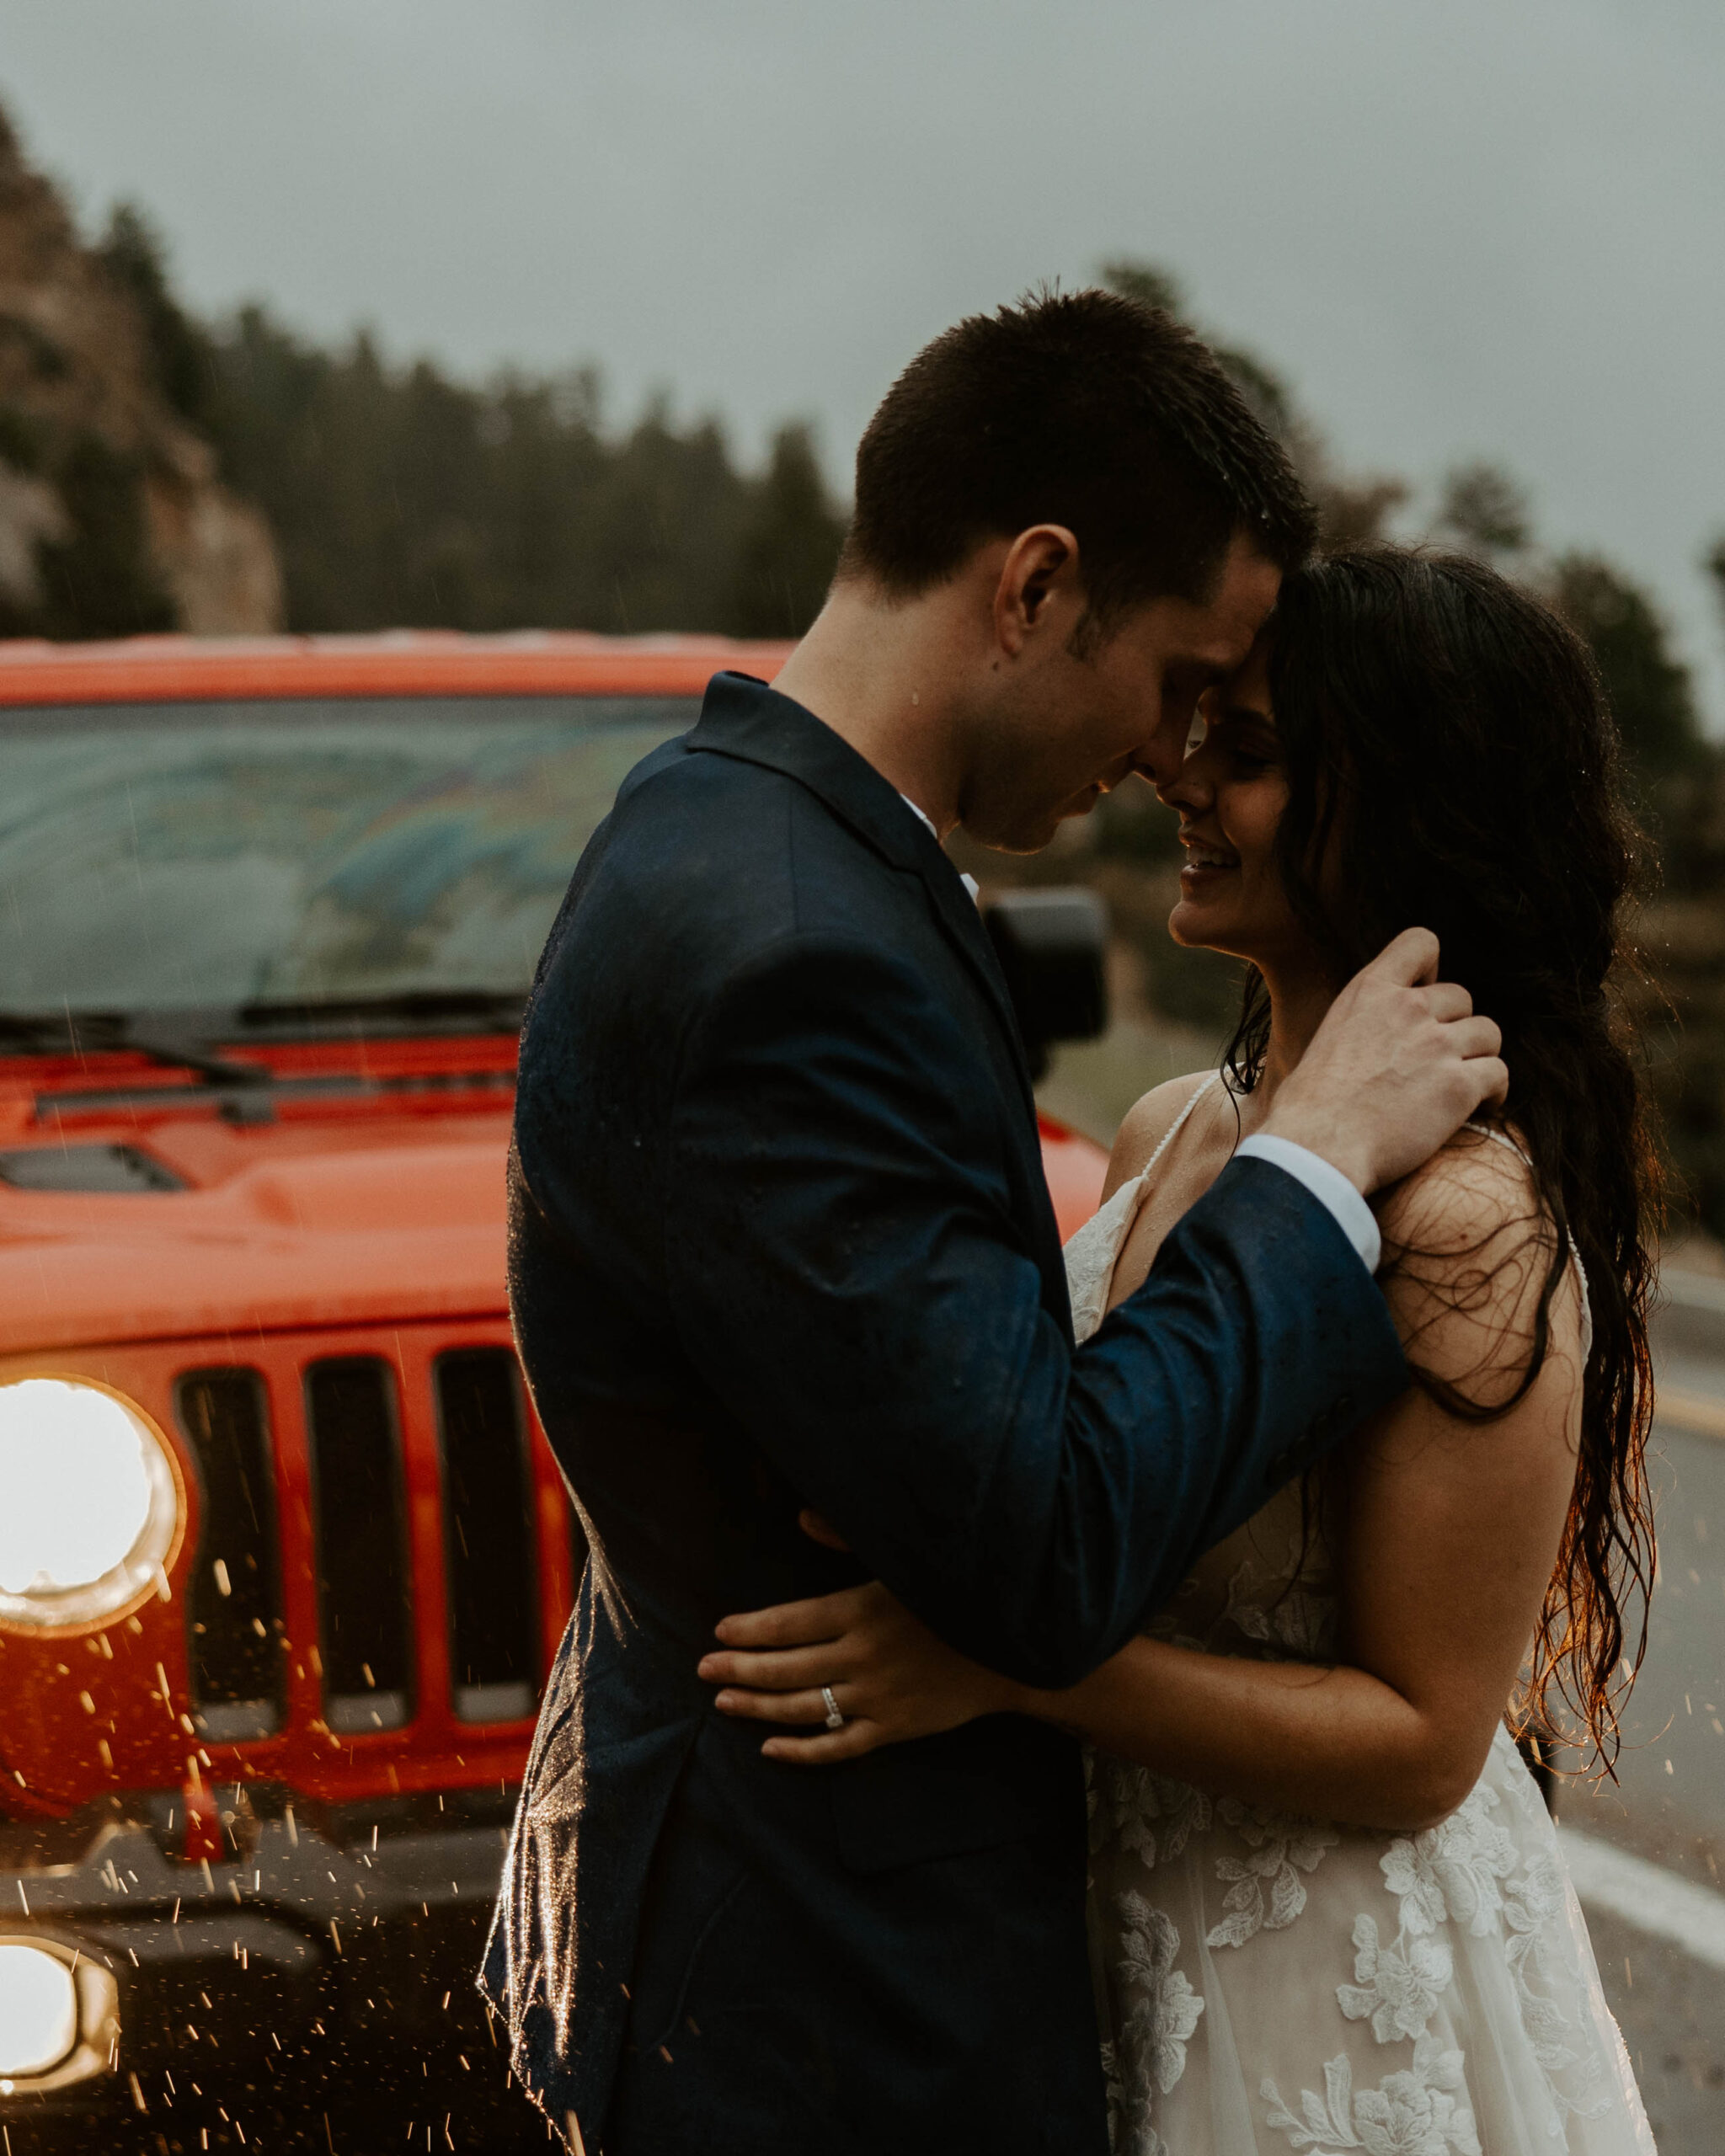 Anna & Chad's rainy day elopement in Estes Park, Colorado